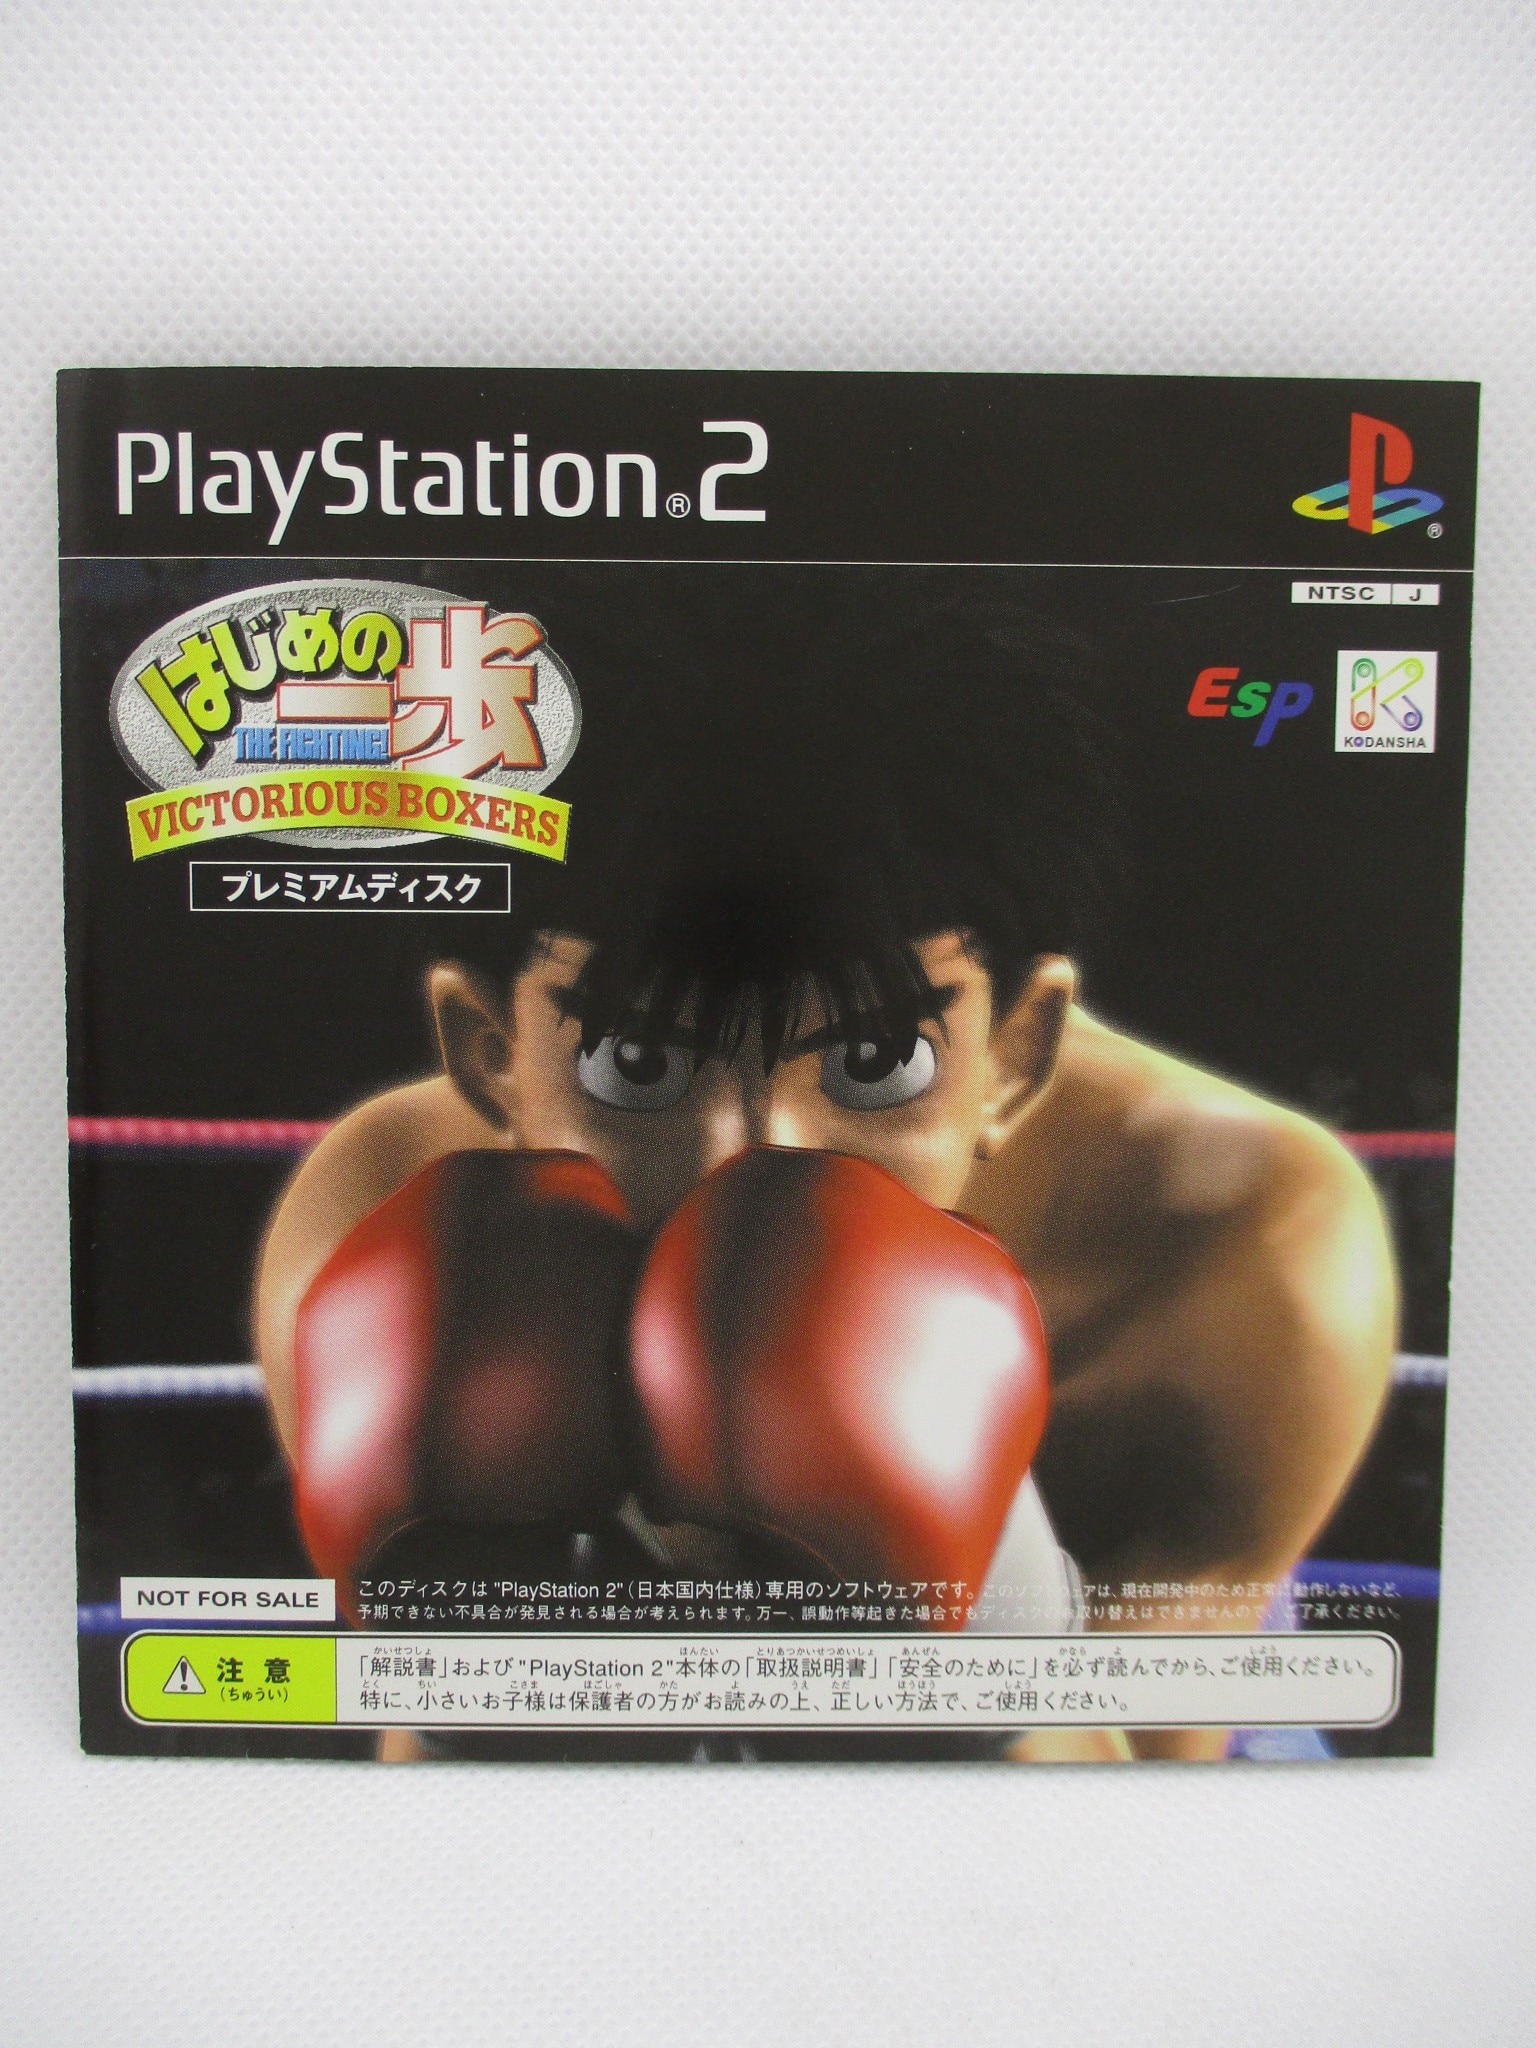 PS2 はじめの一歩 THE FIGHTING! VICTORIOUS BOXERS プレミアム 